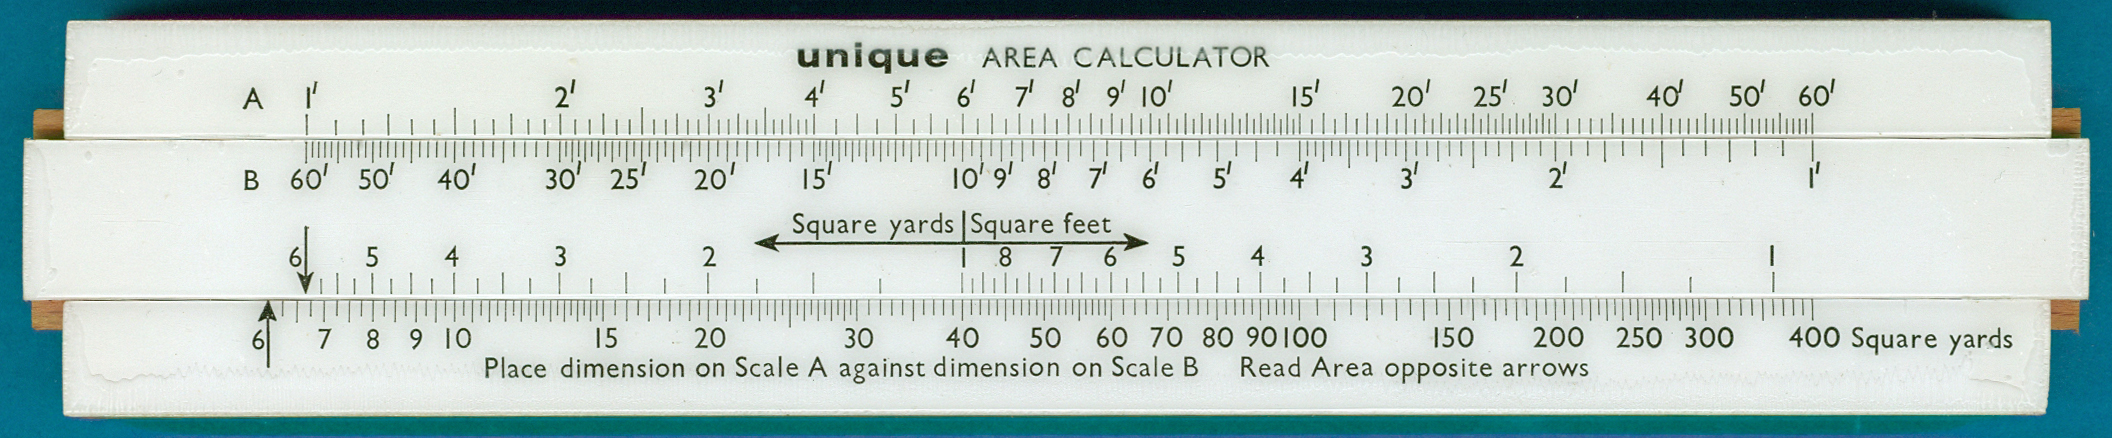 Unique Area Calculator Pocket Surface Areas - imperial